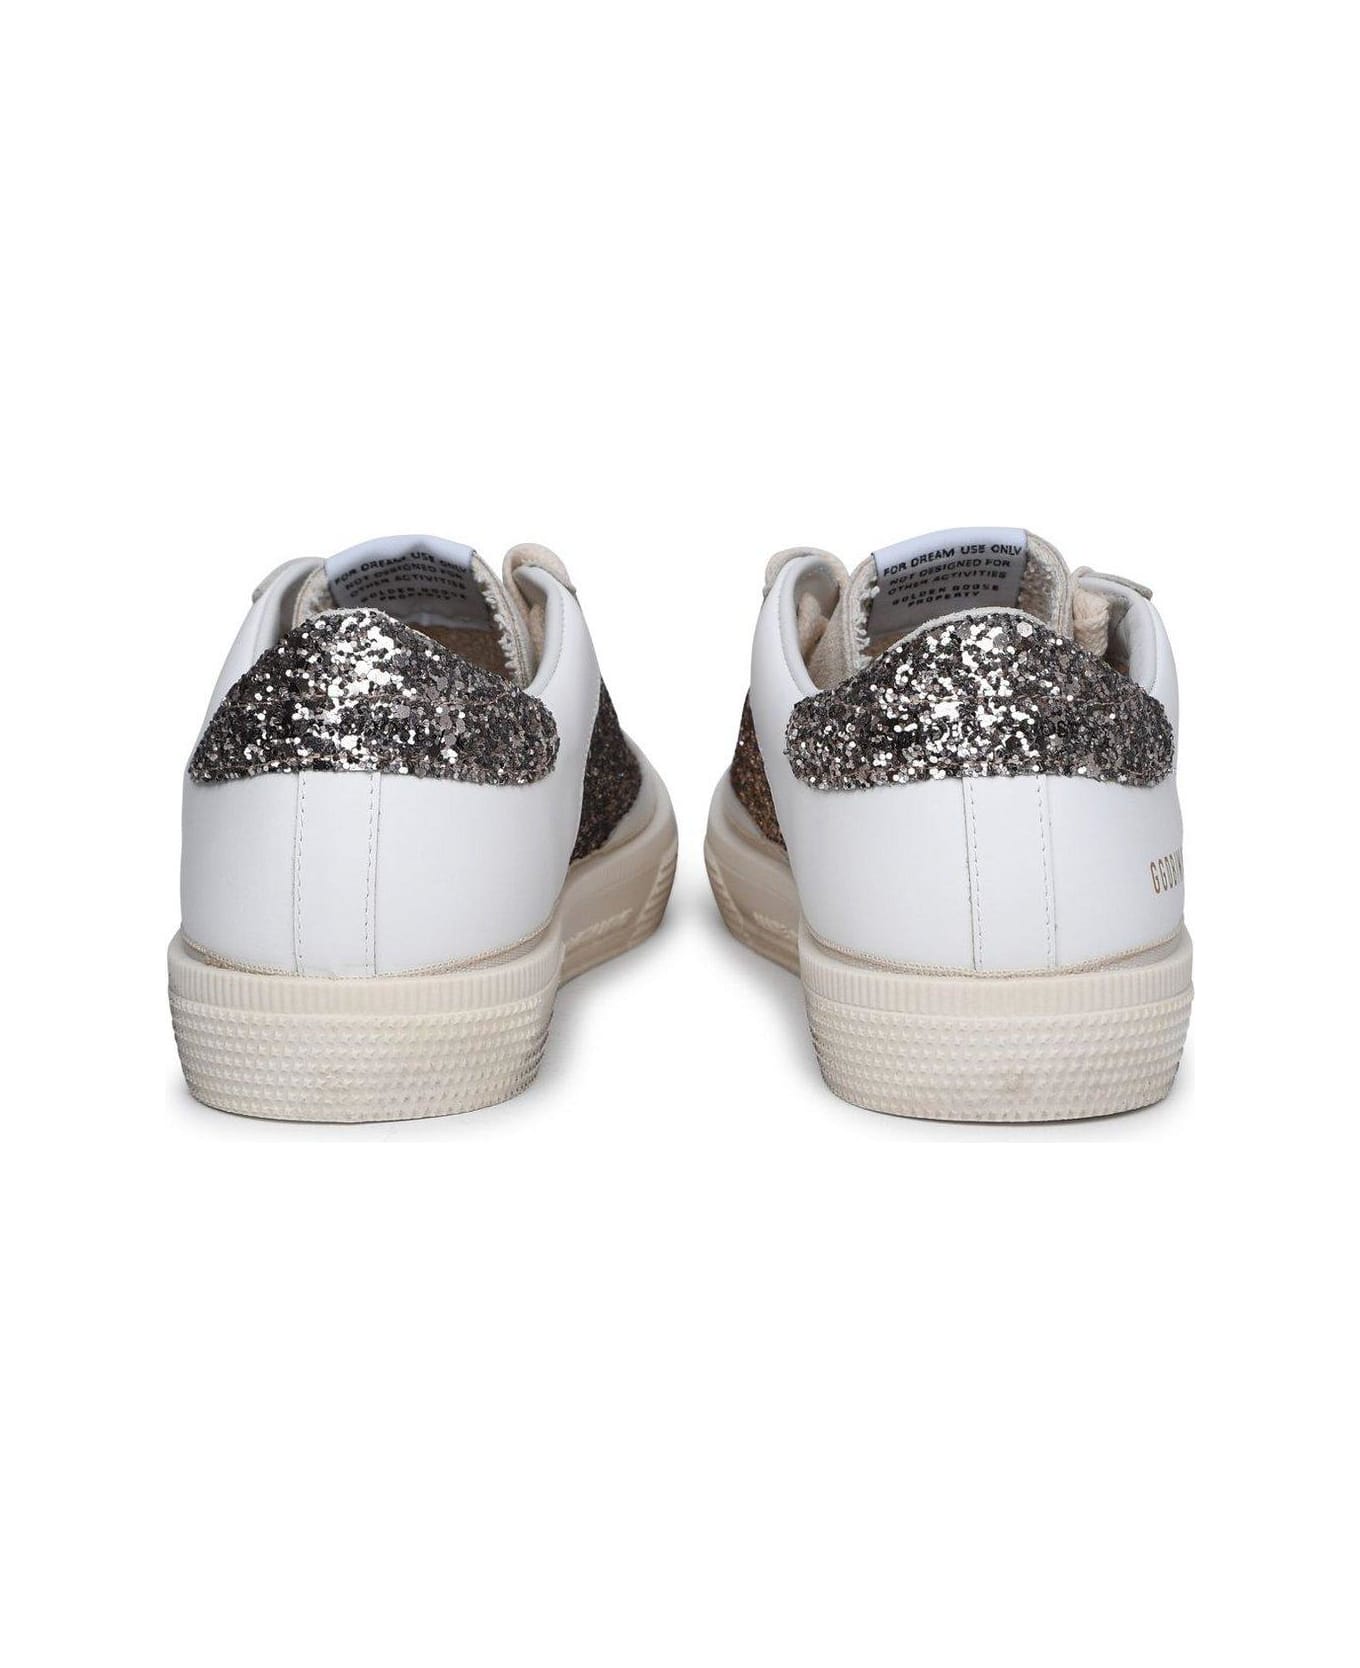 Golden Goose N May Star Glittered Sneakers - Glitter